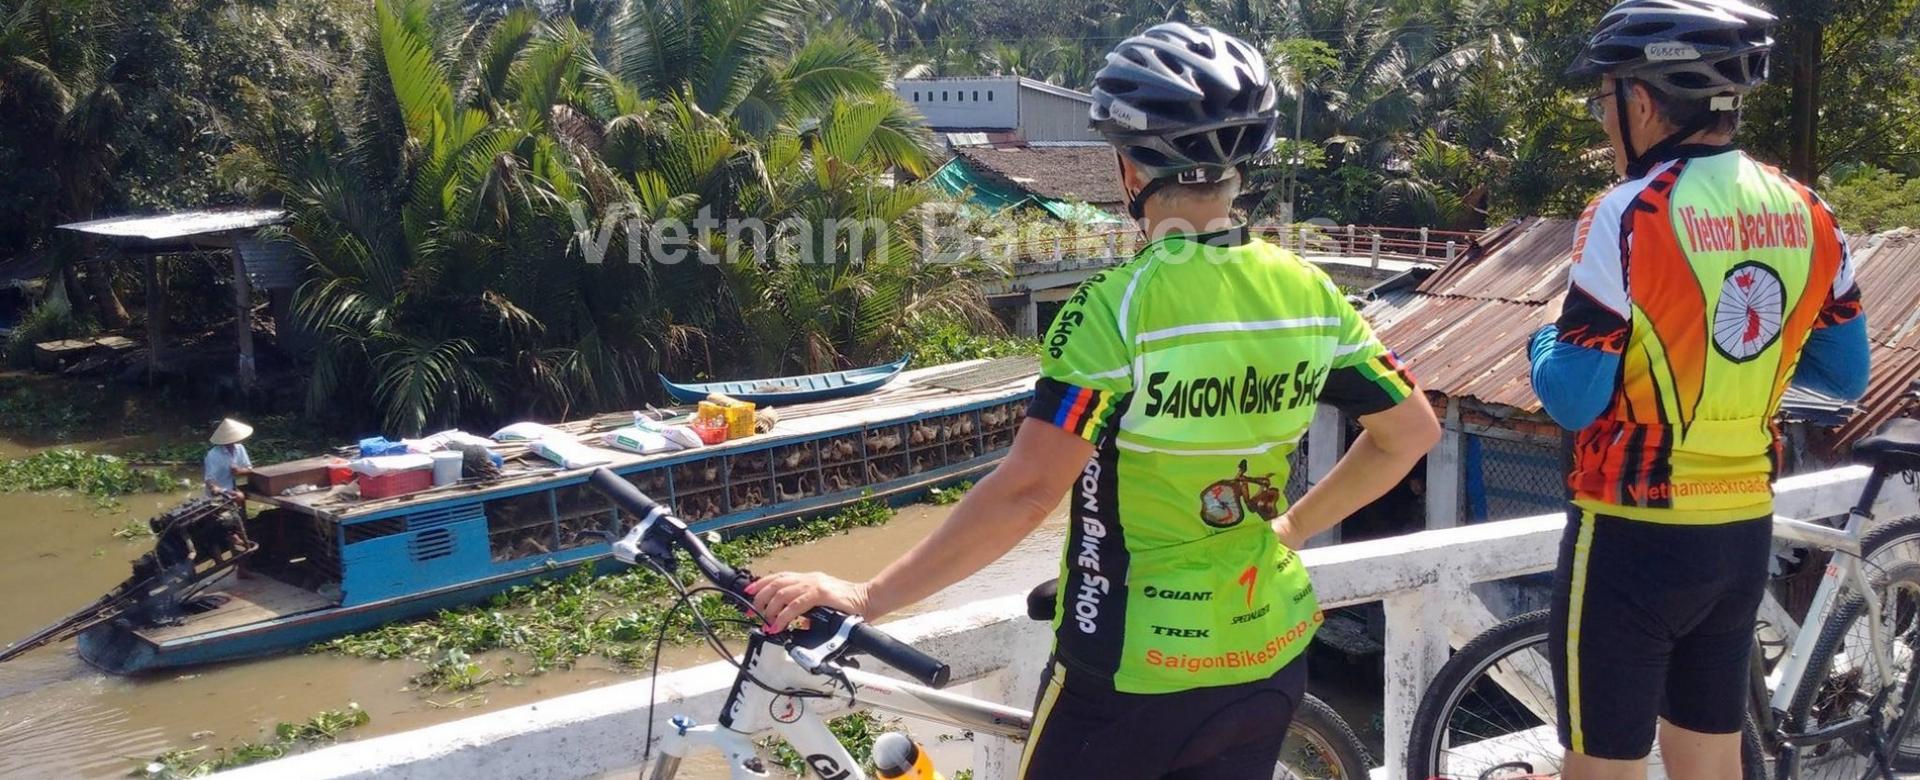 Cycling to Ben Tre - Tra Vinh - Soc Trang - Can Tho